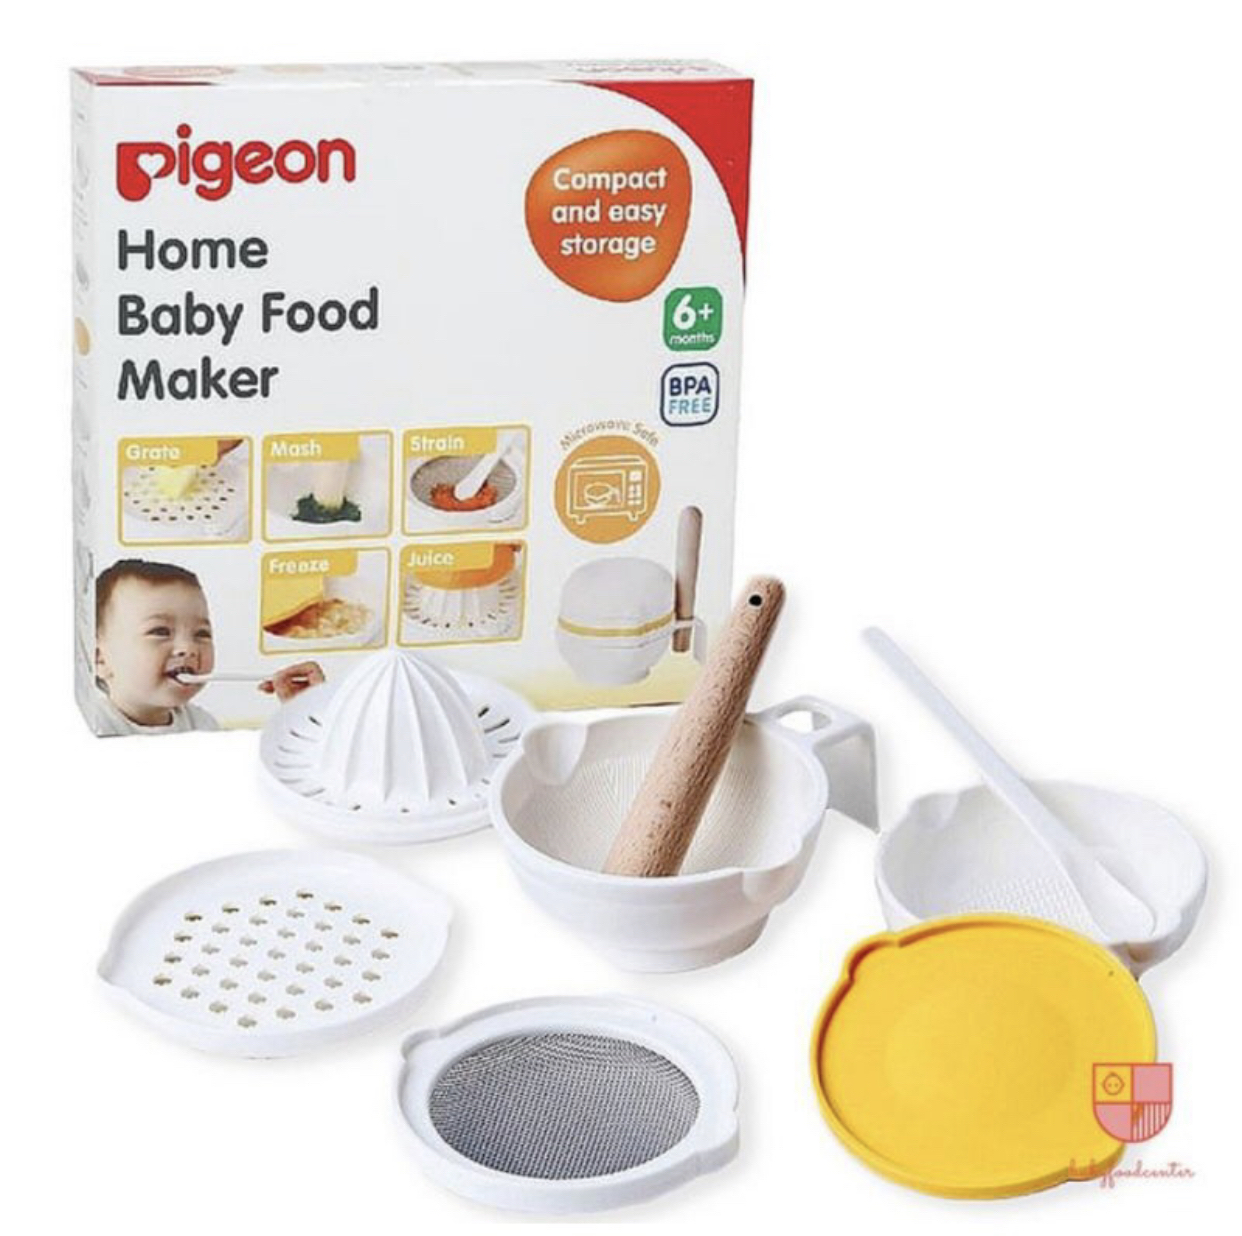 4.Pigeon home baby food maker